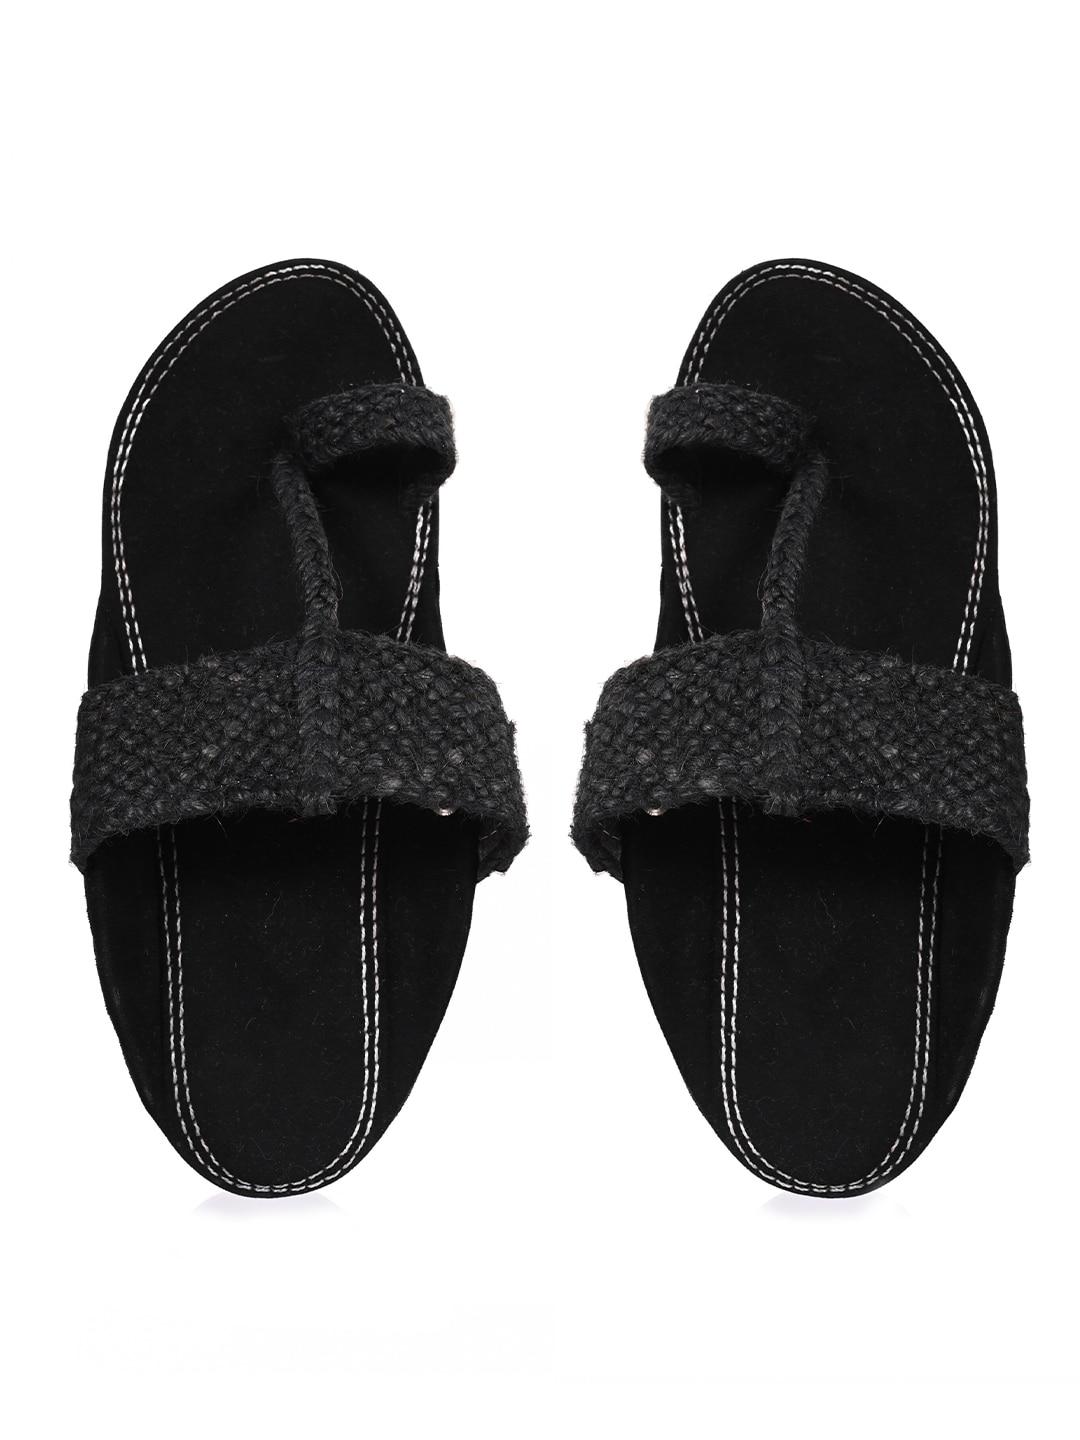 aristitch men black textured comfort sandals